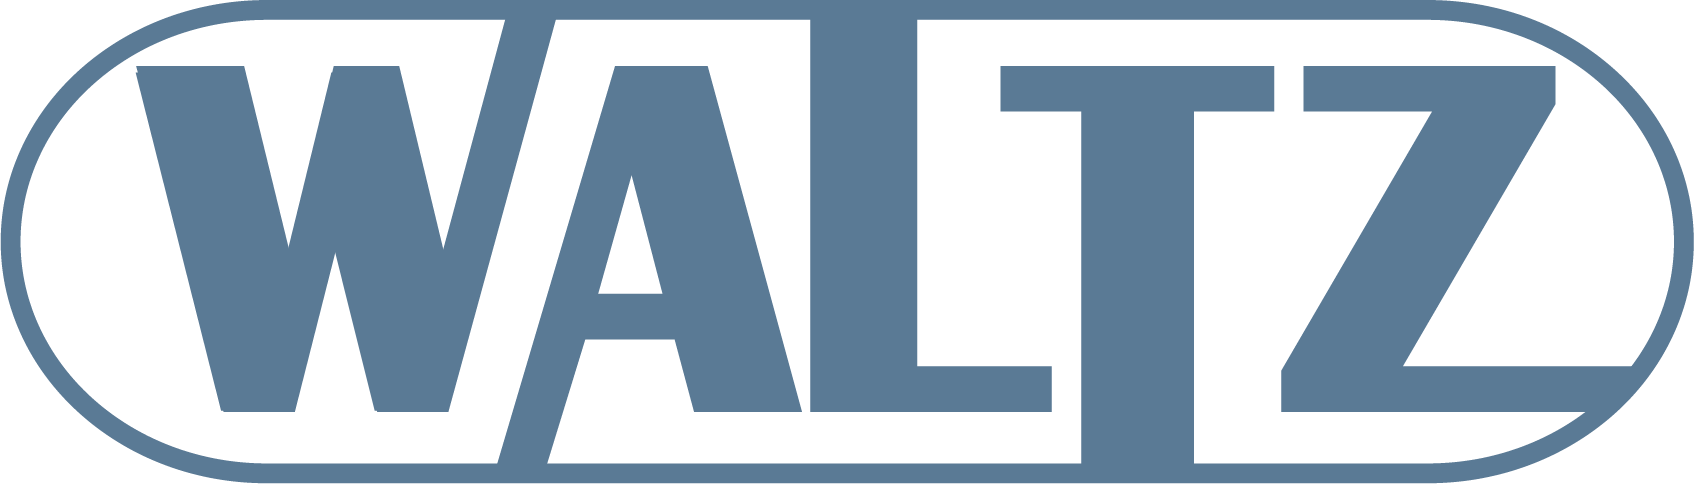 Waltz Company Logo